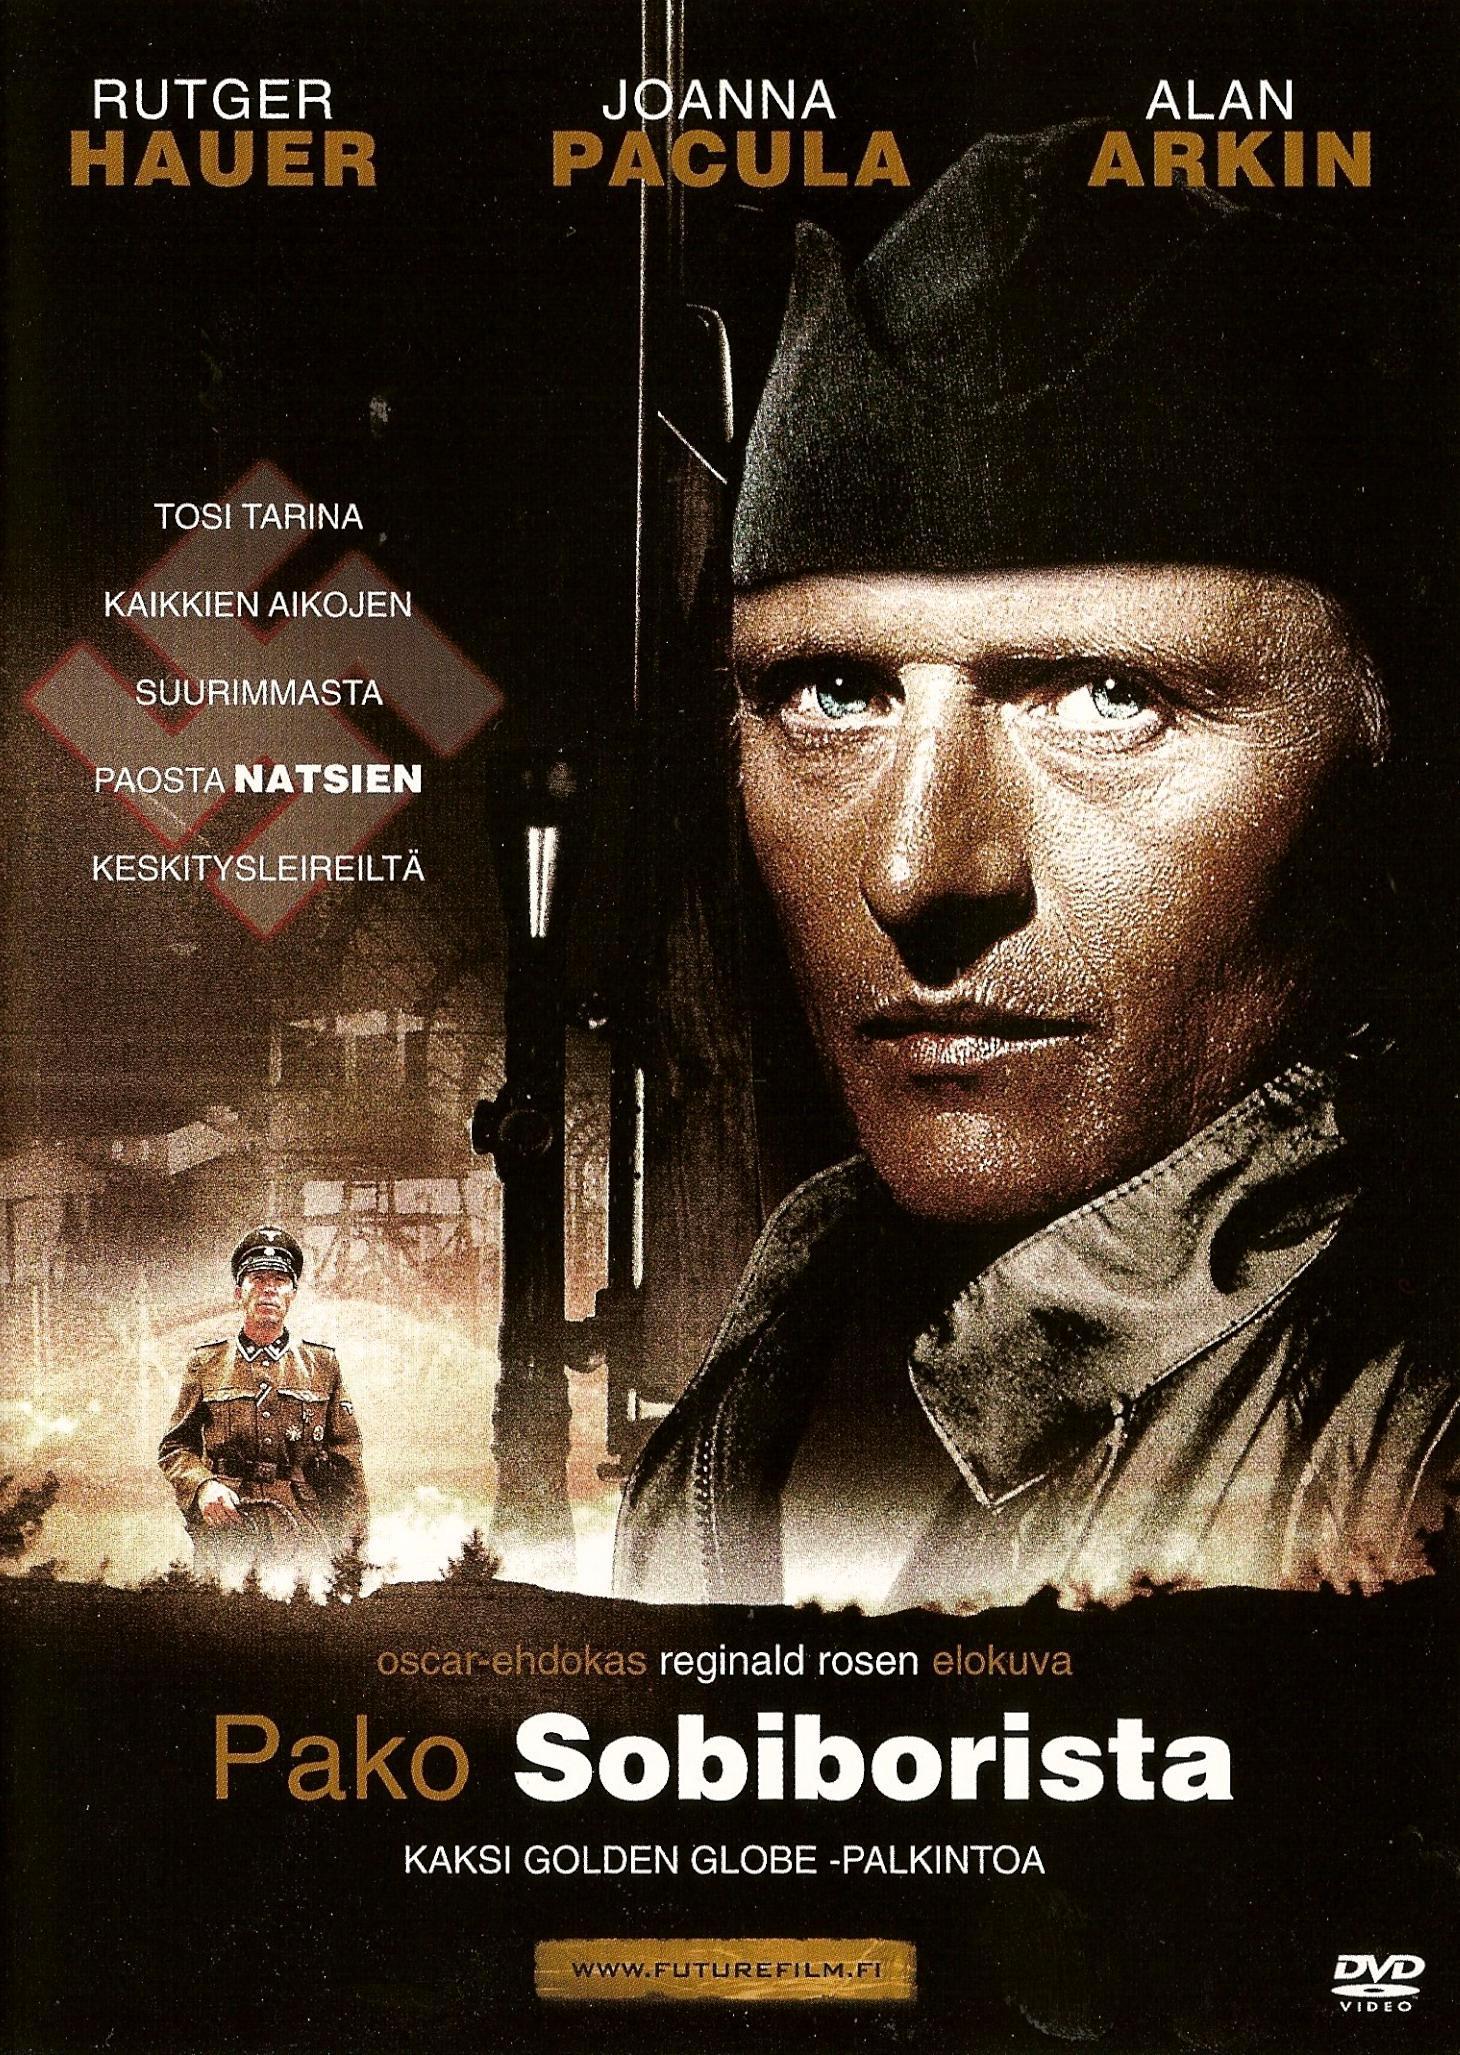 Постер фильма Побег из Собибора | Escape from Sobibor